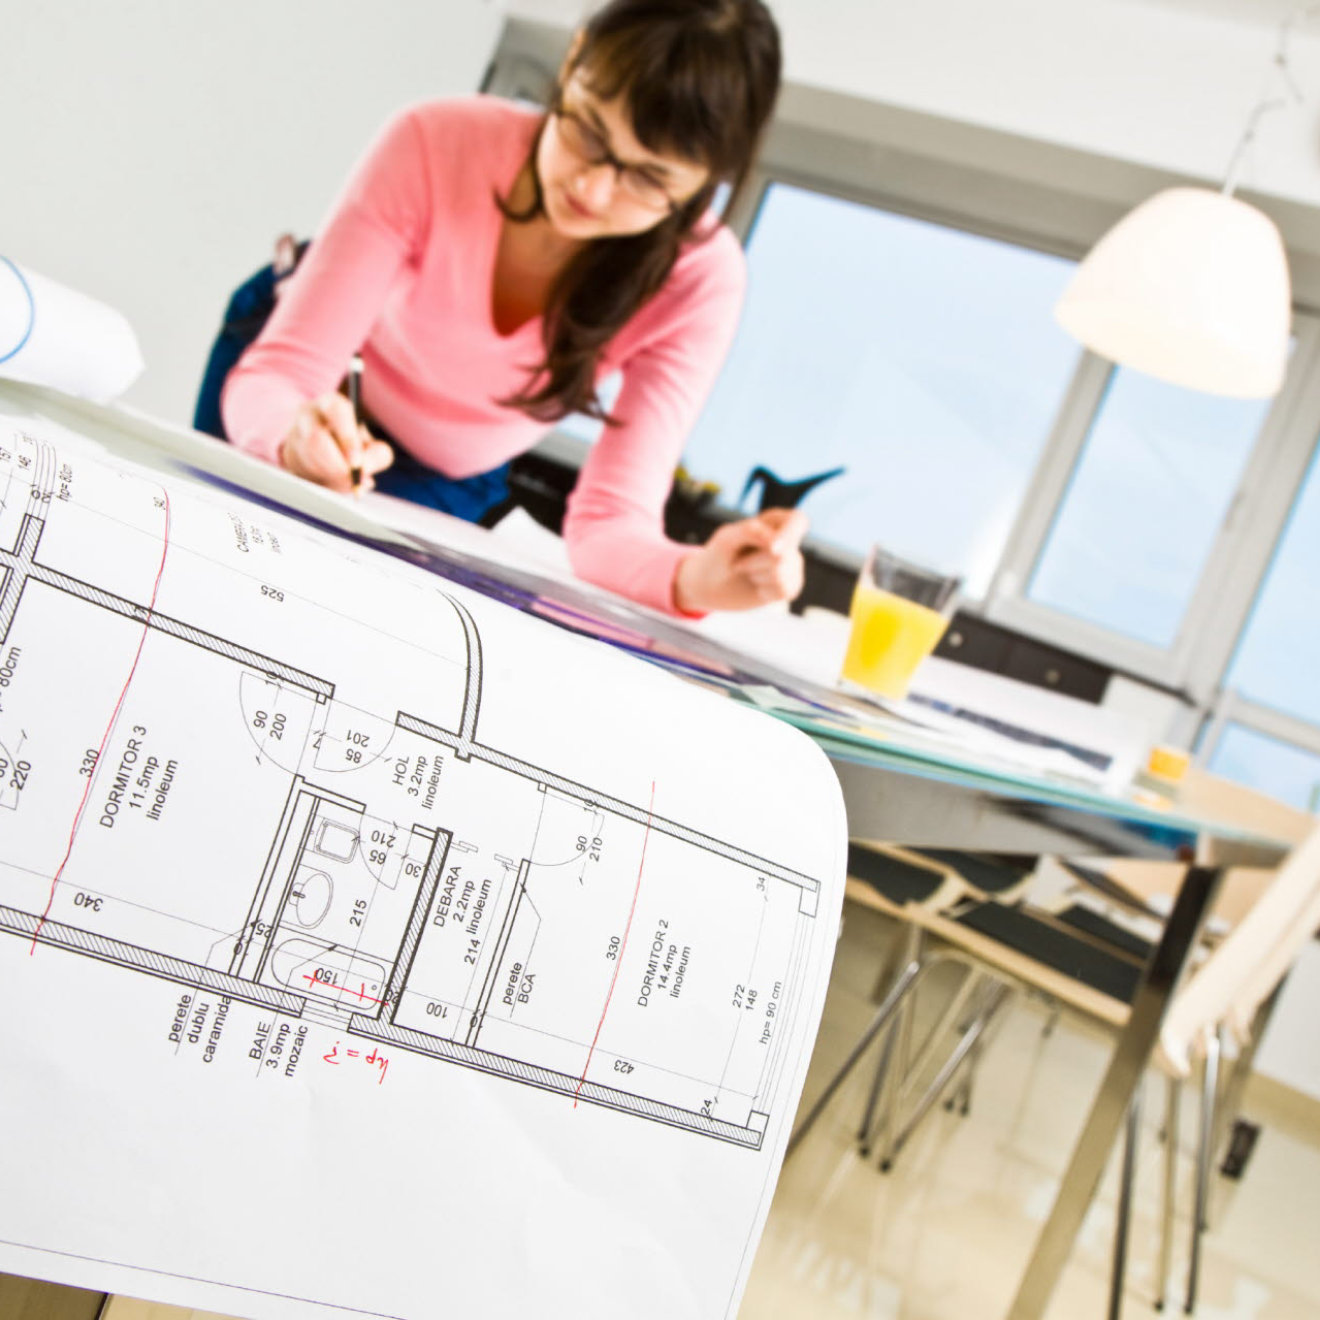 A woman at a drafting desk looking at blueprints